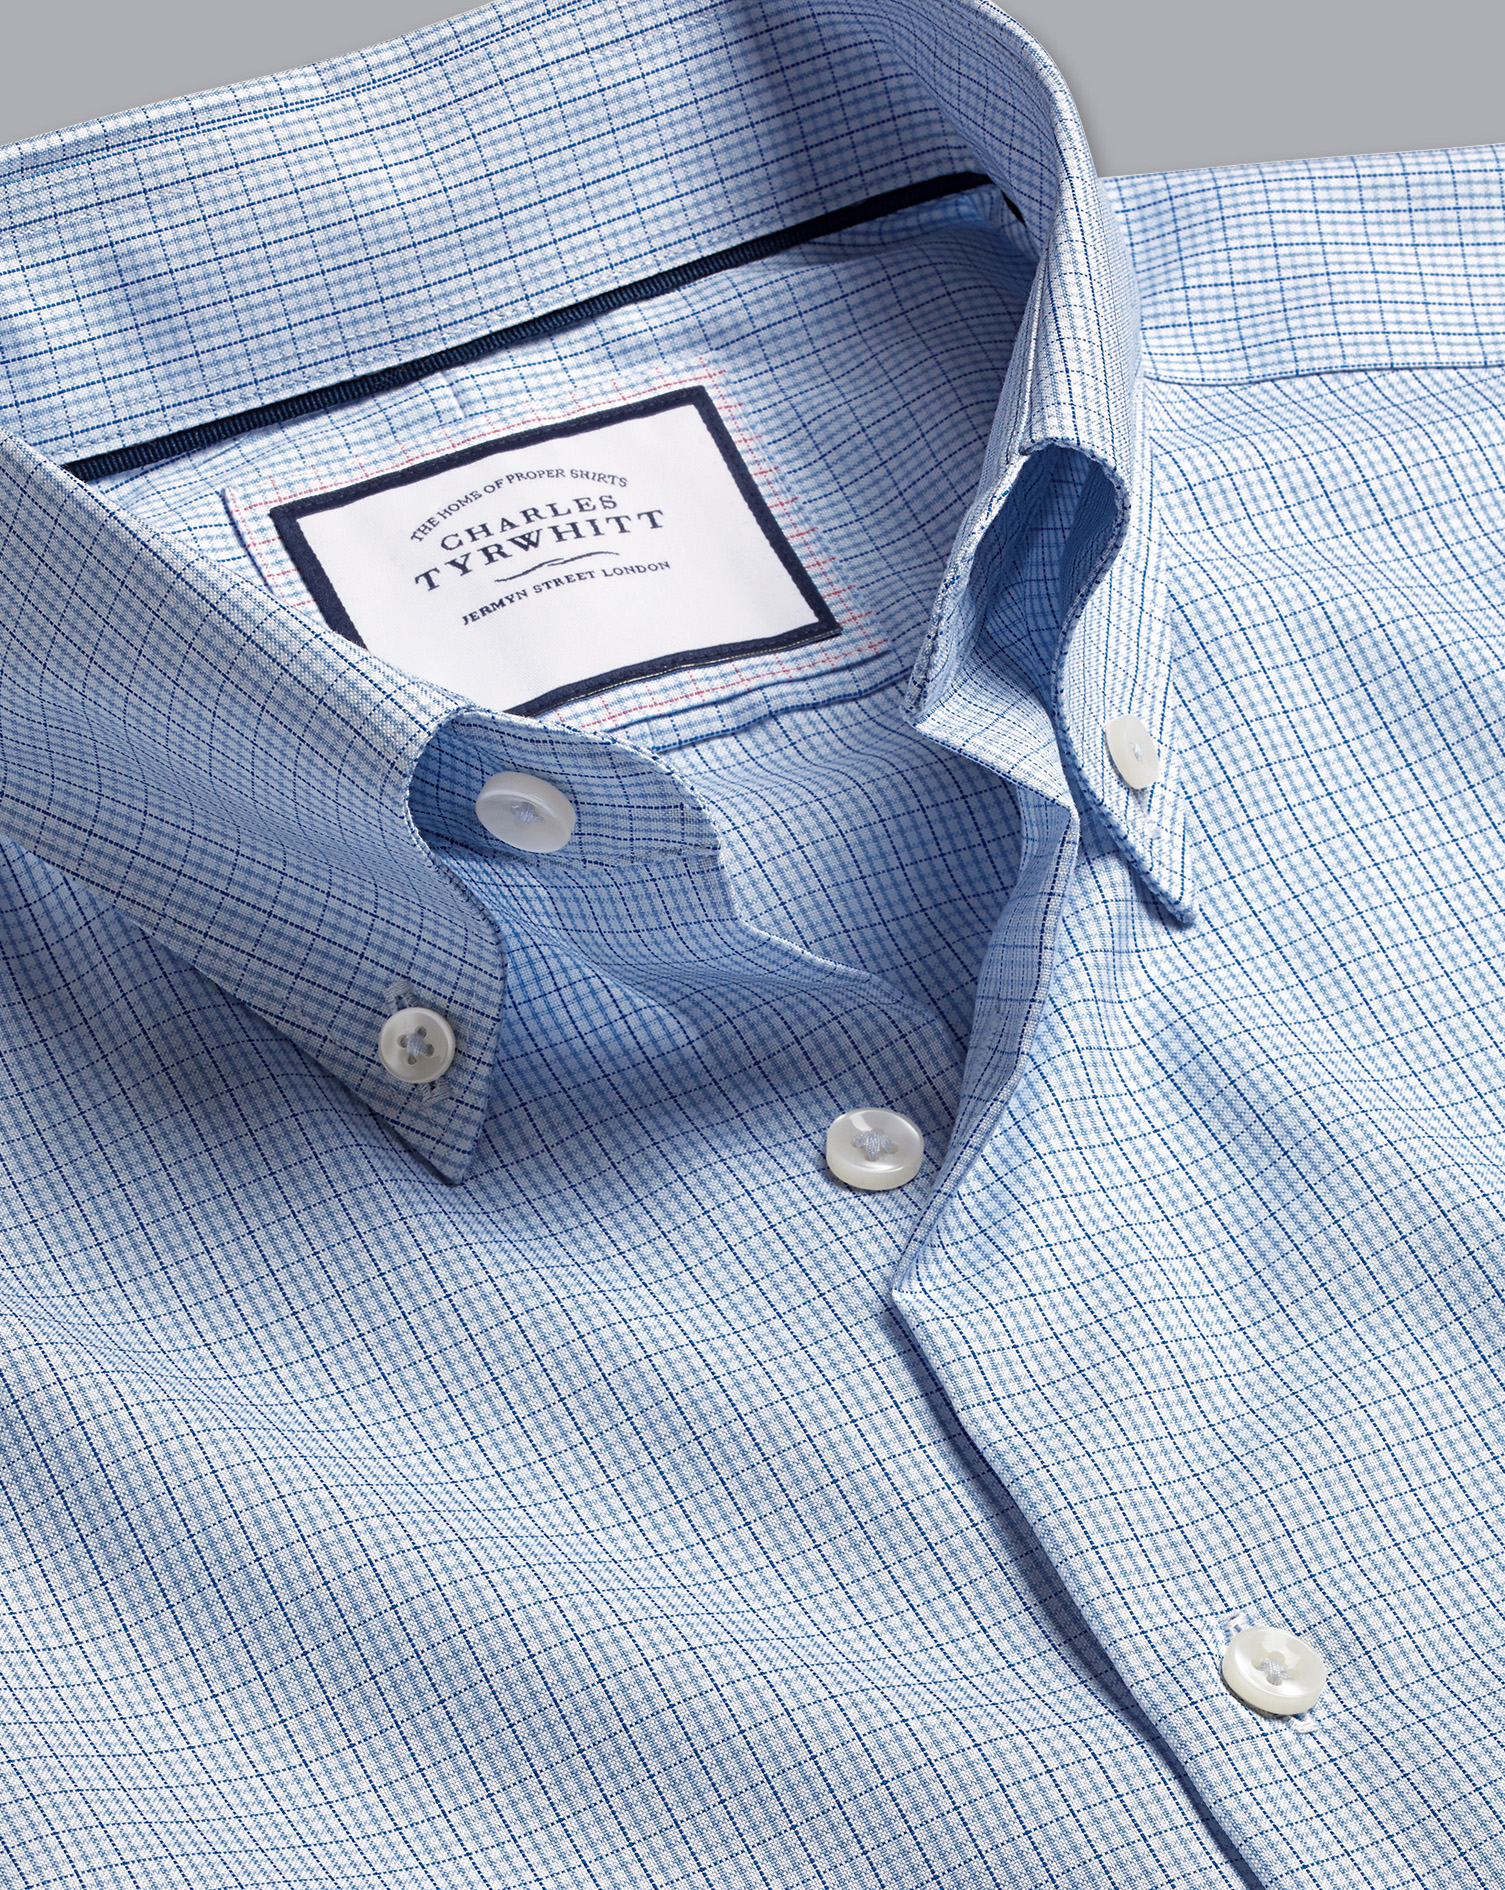 Men's Charles Tyrwhitt Button-Down Collar Non-Iron Check Dress Shirt - Sky Blue Single Cuff Size Med